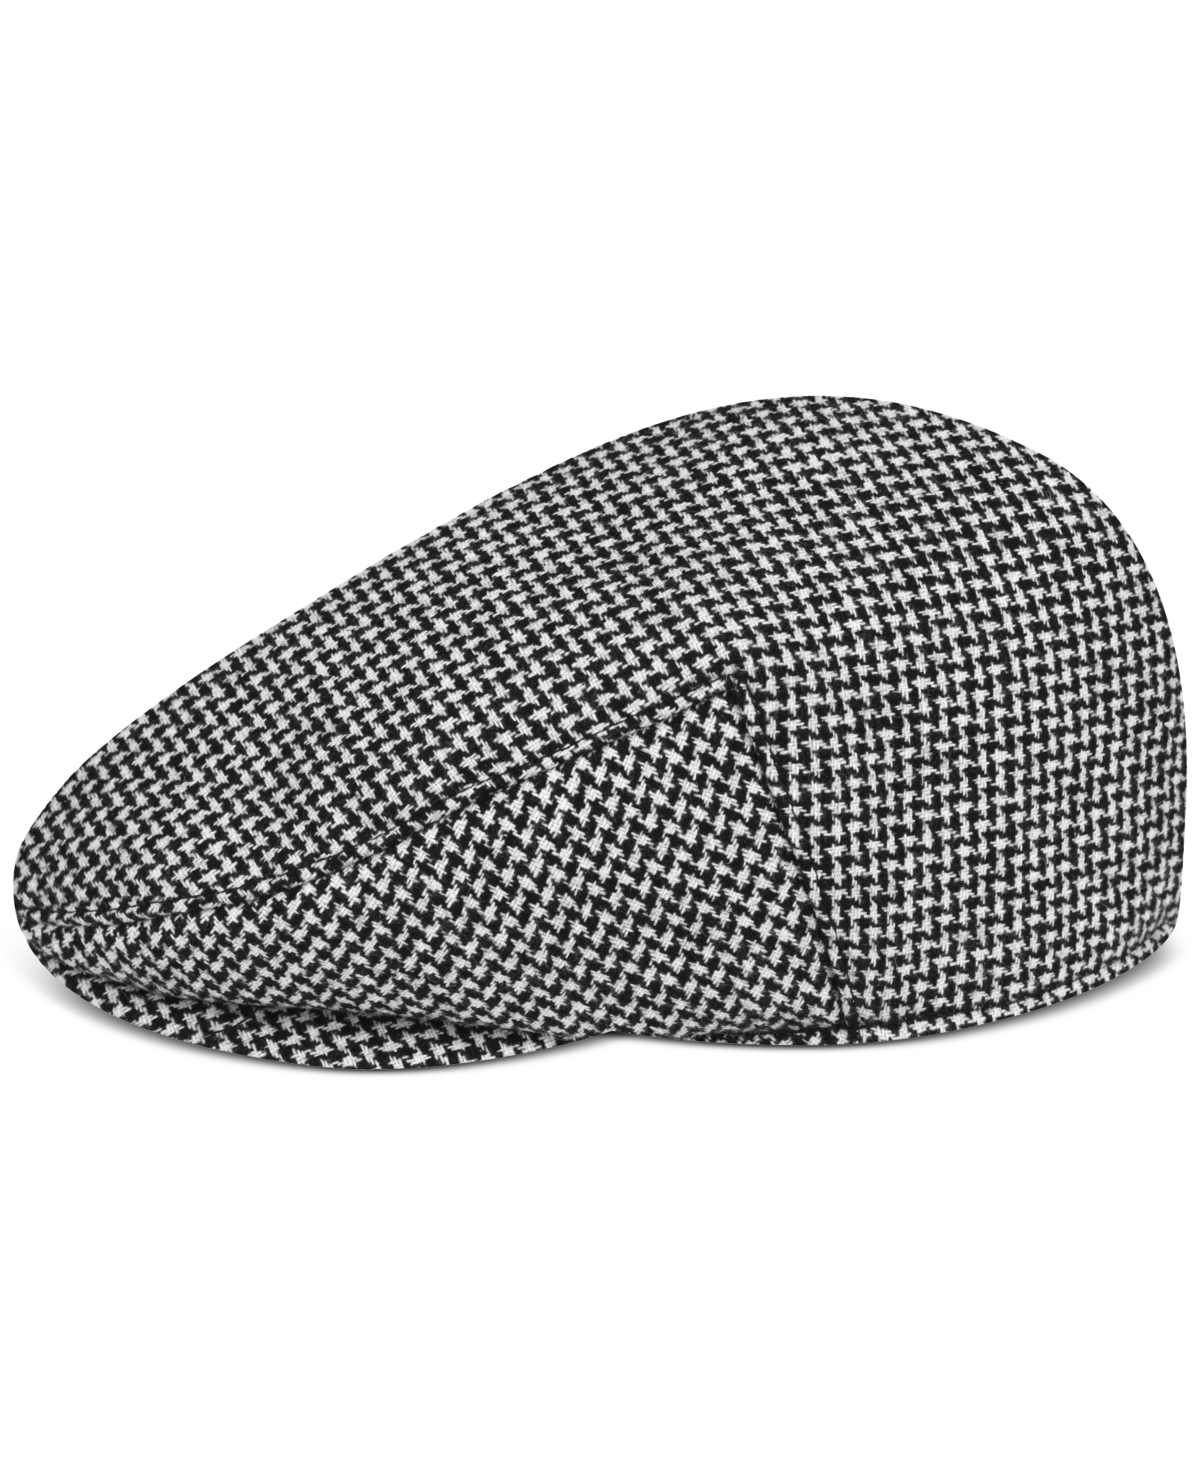 Country Gentlemen Wool Blend Country Gentleman Hat, British Ivy Cap In Black,white